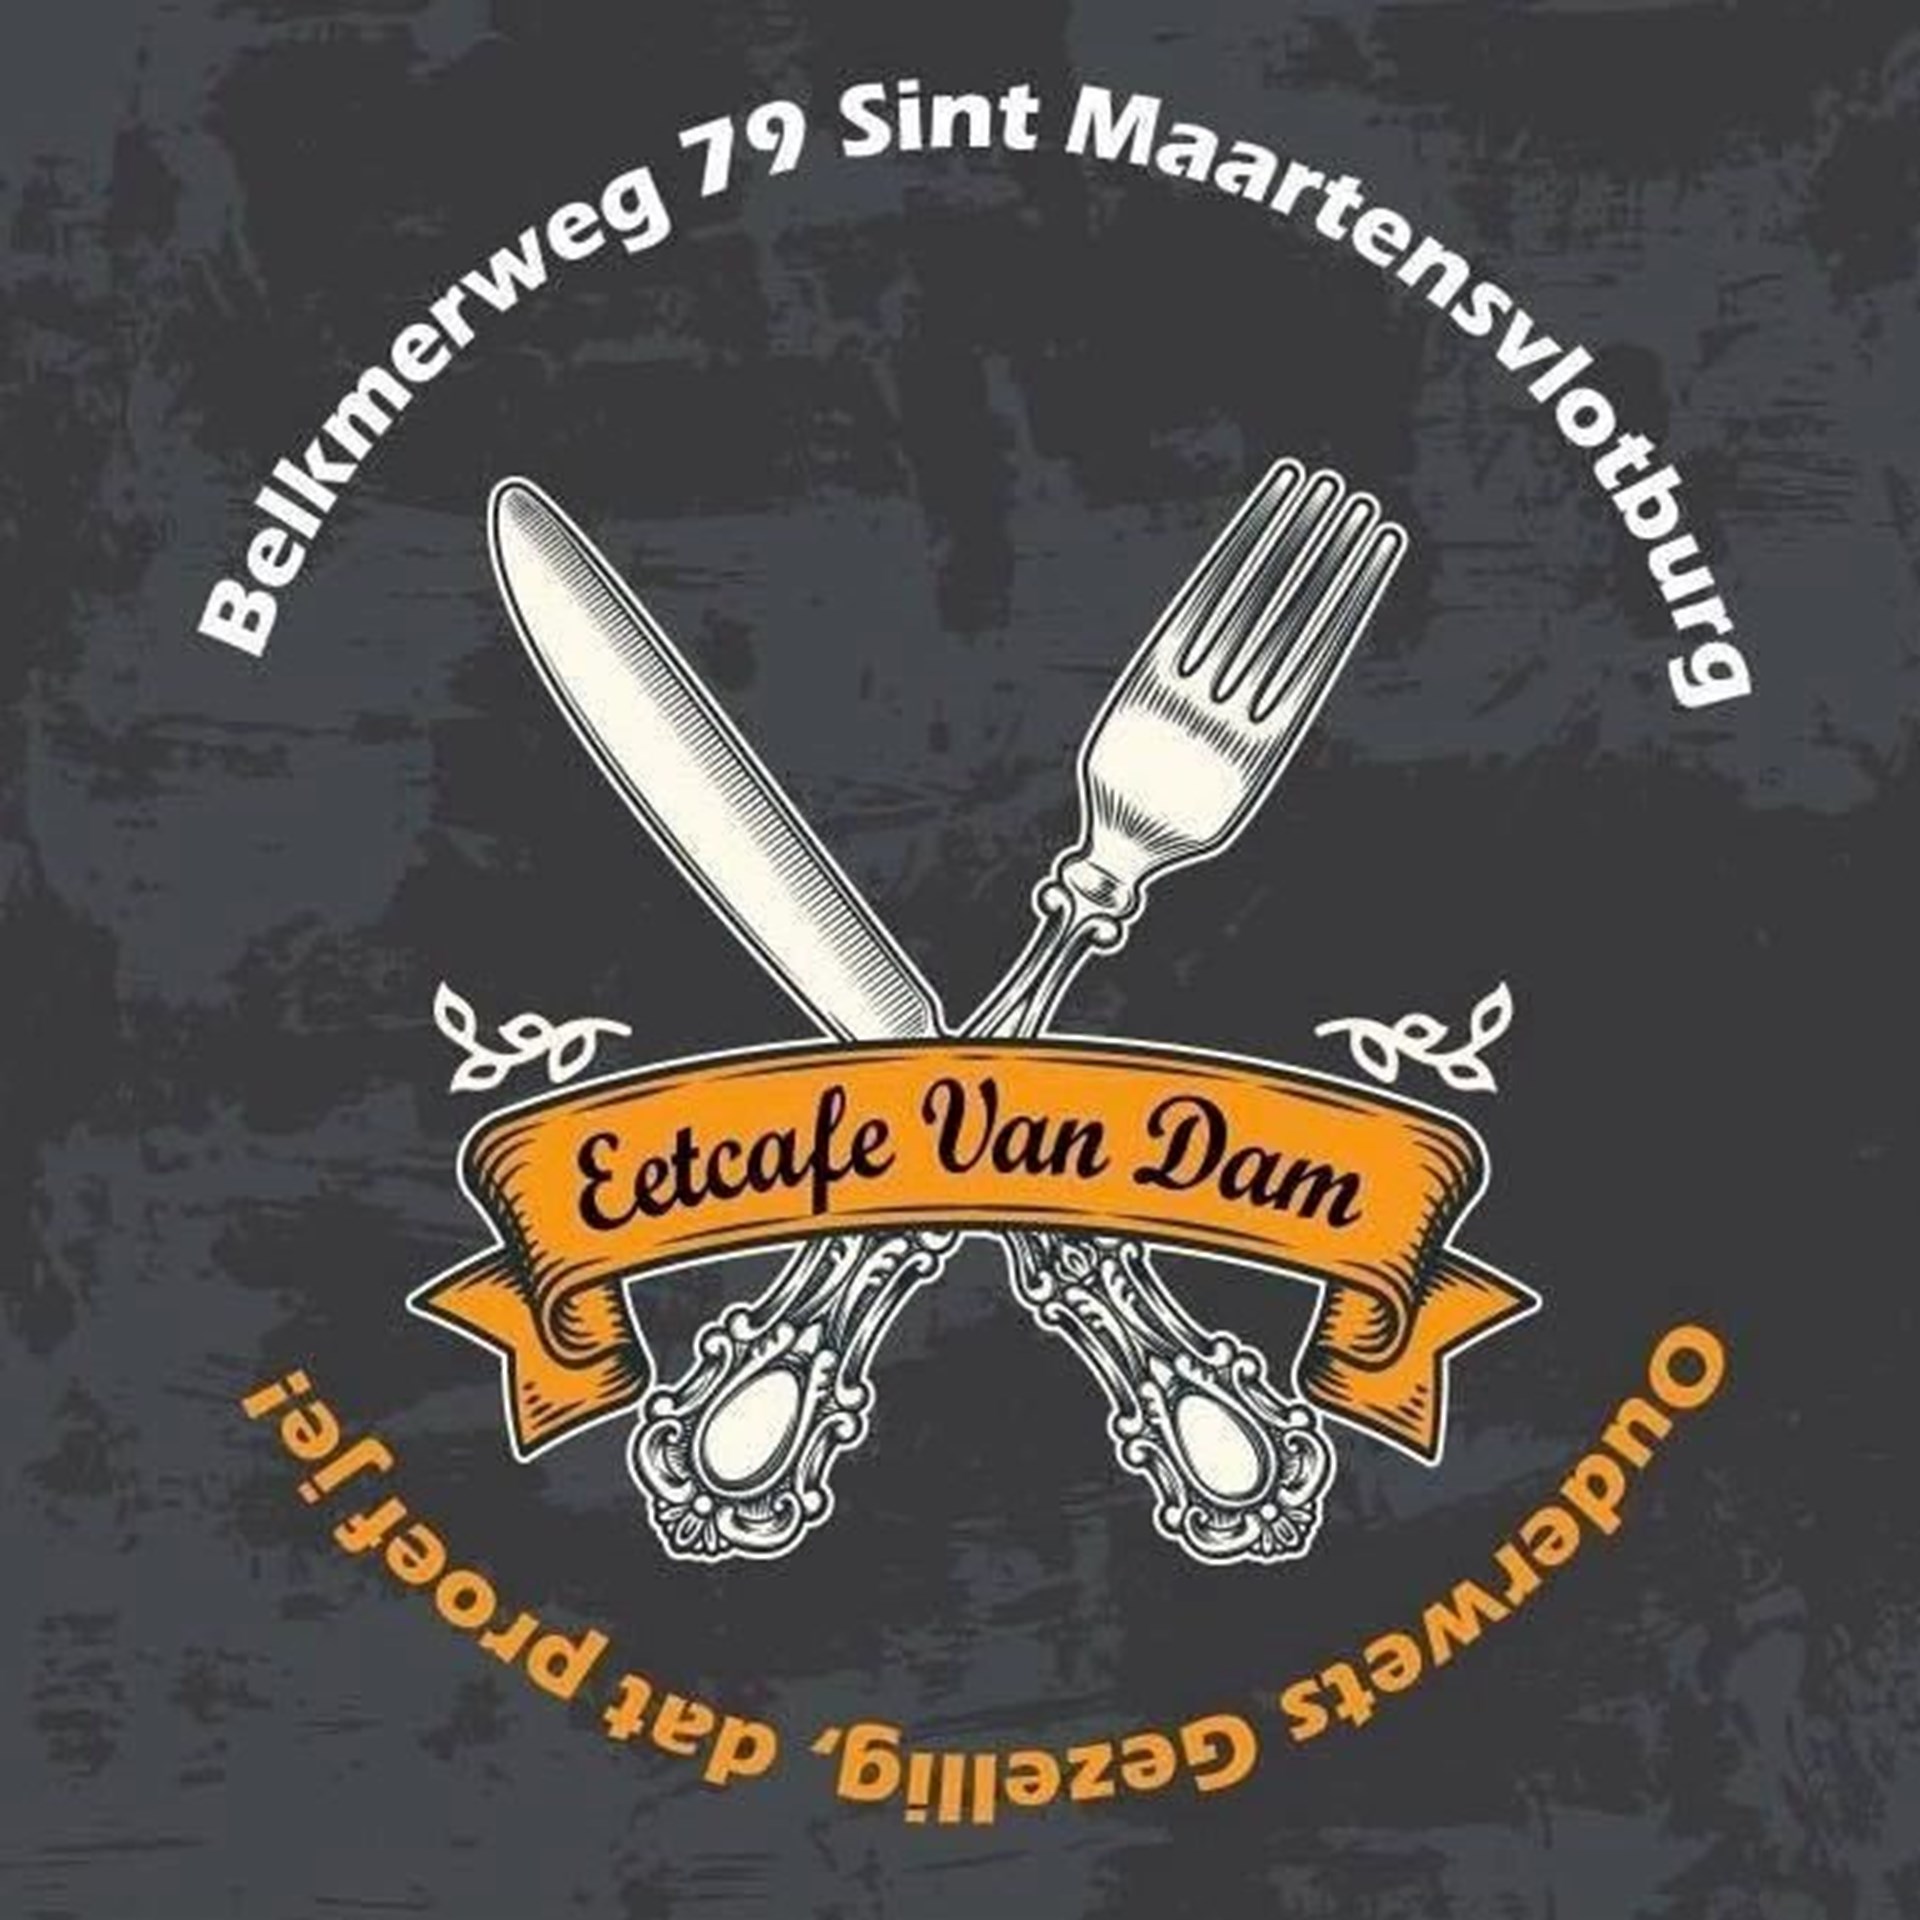 Eetcafé van Dam banner